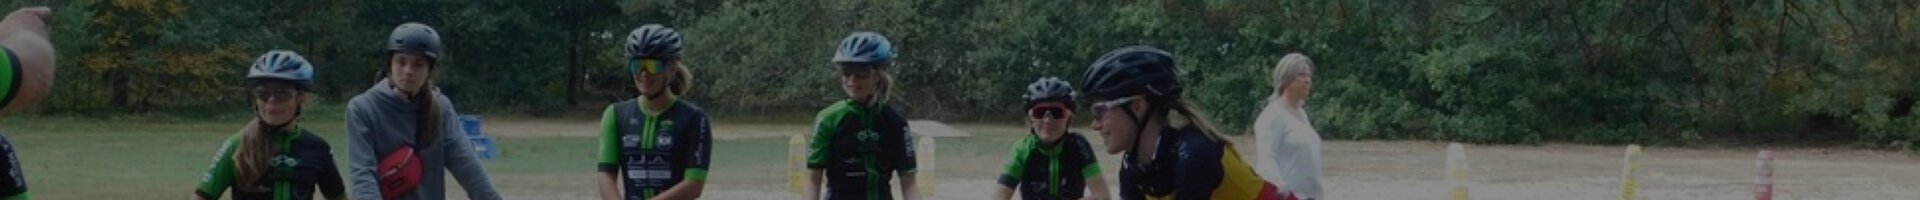 Training cycling jeugd meisjes